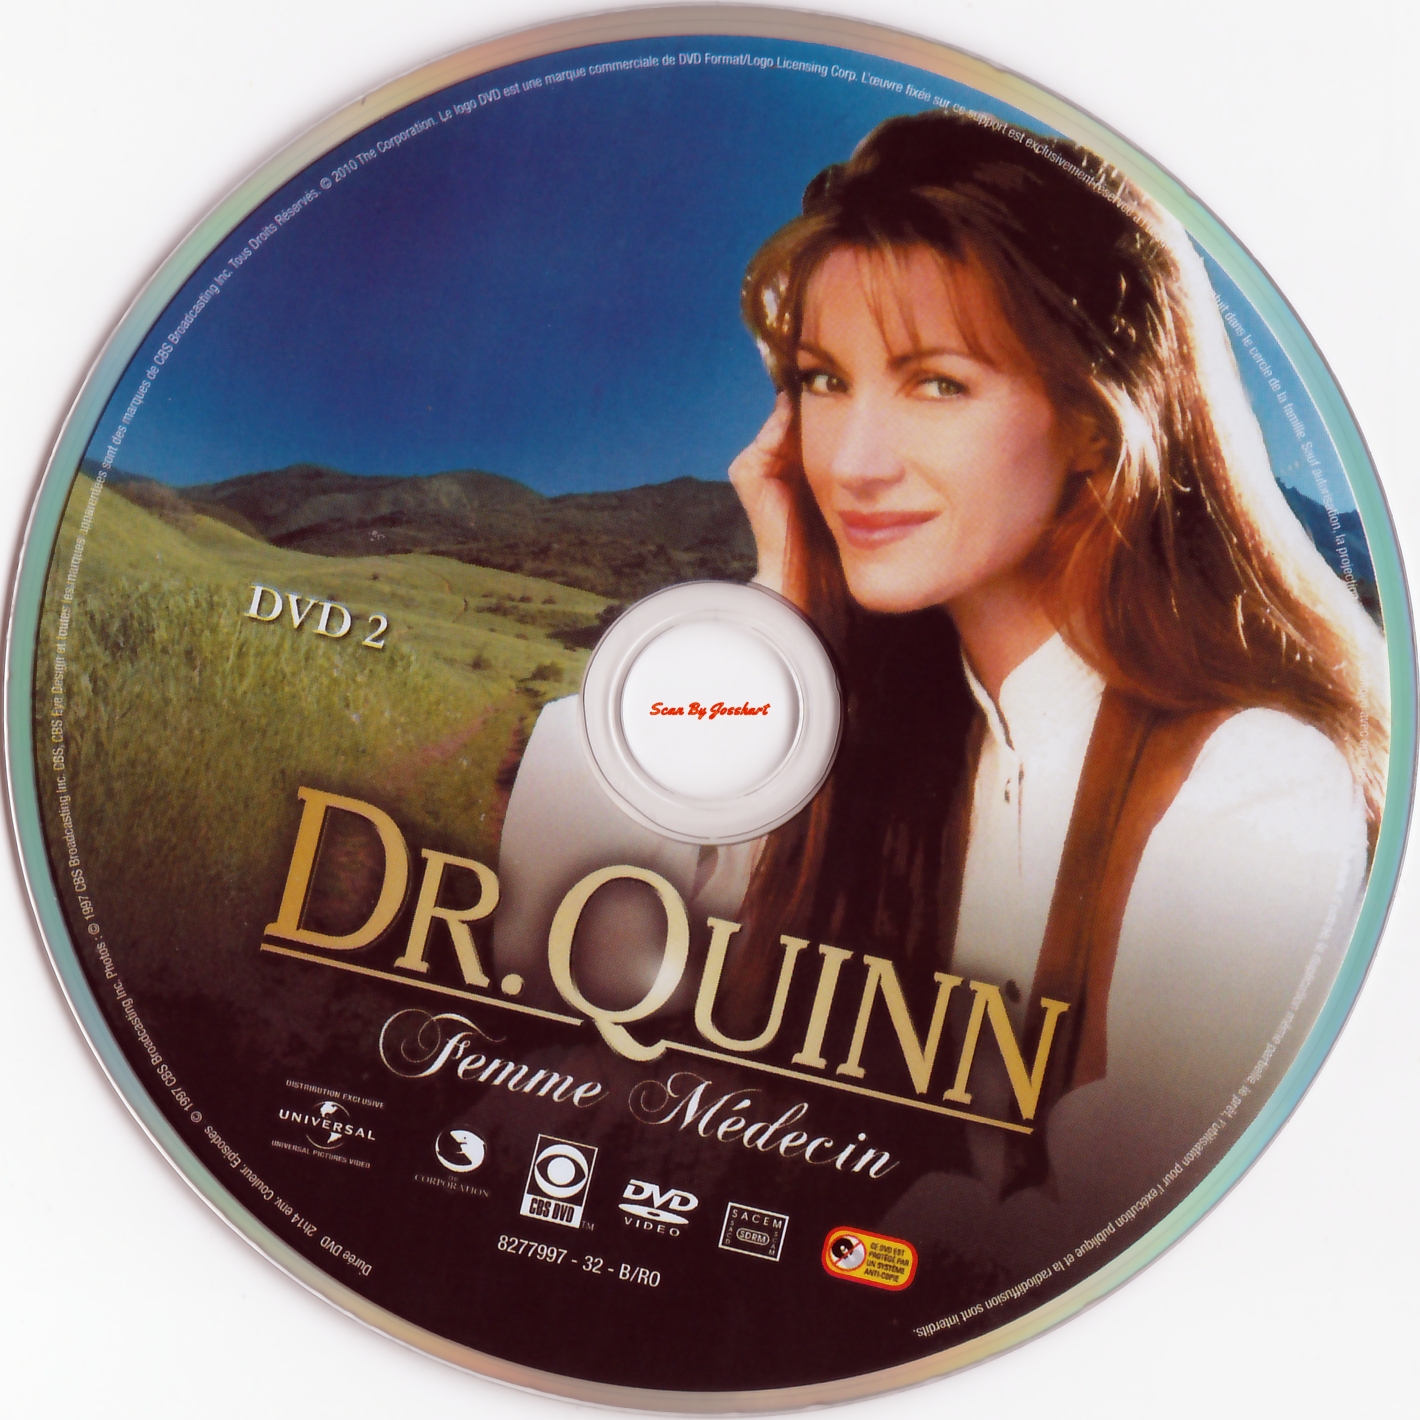 Docteur Quinn femme mdecin - Integrale Saison 6 DISC 2